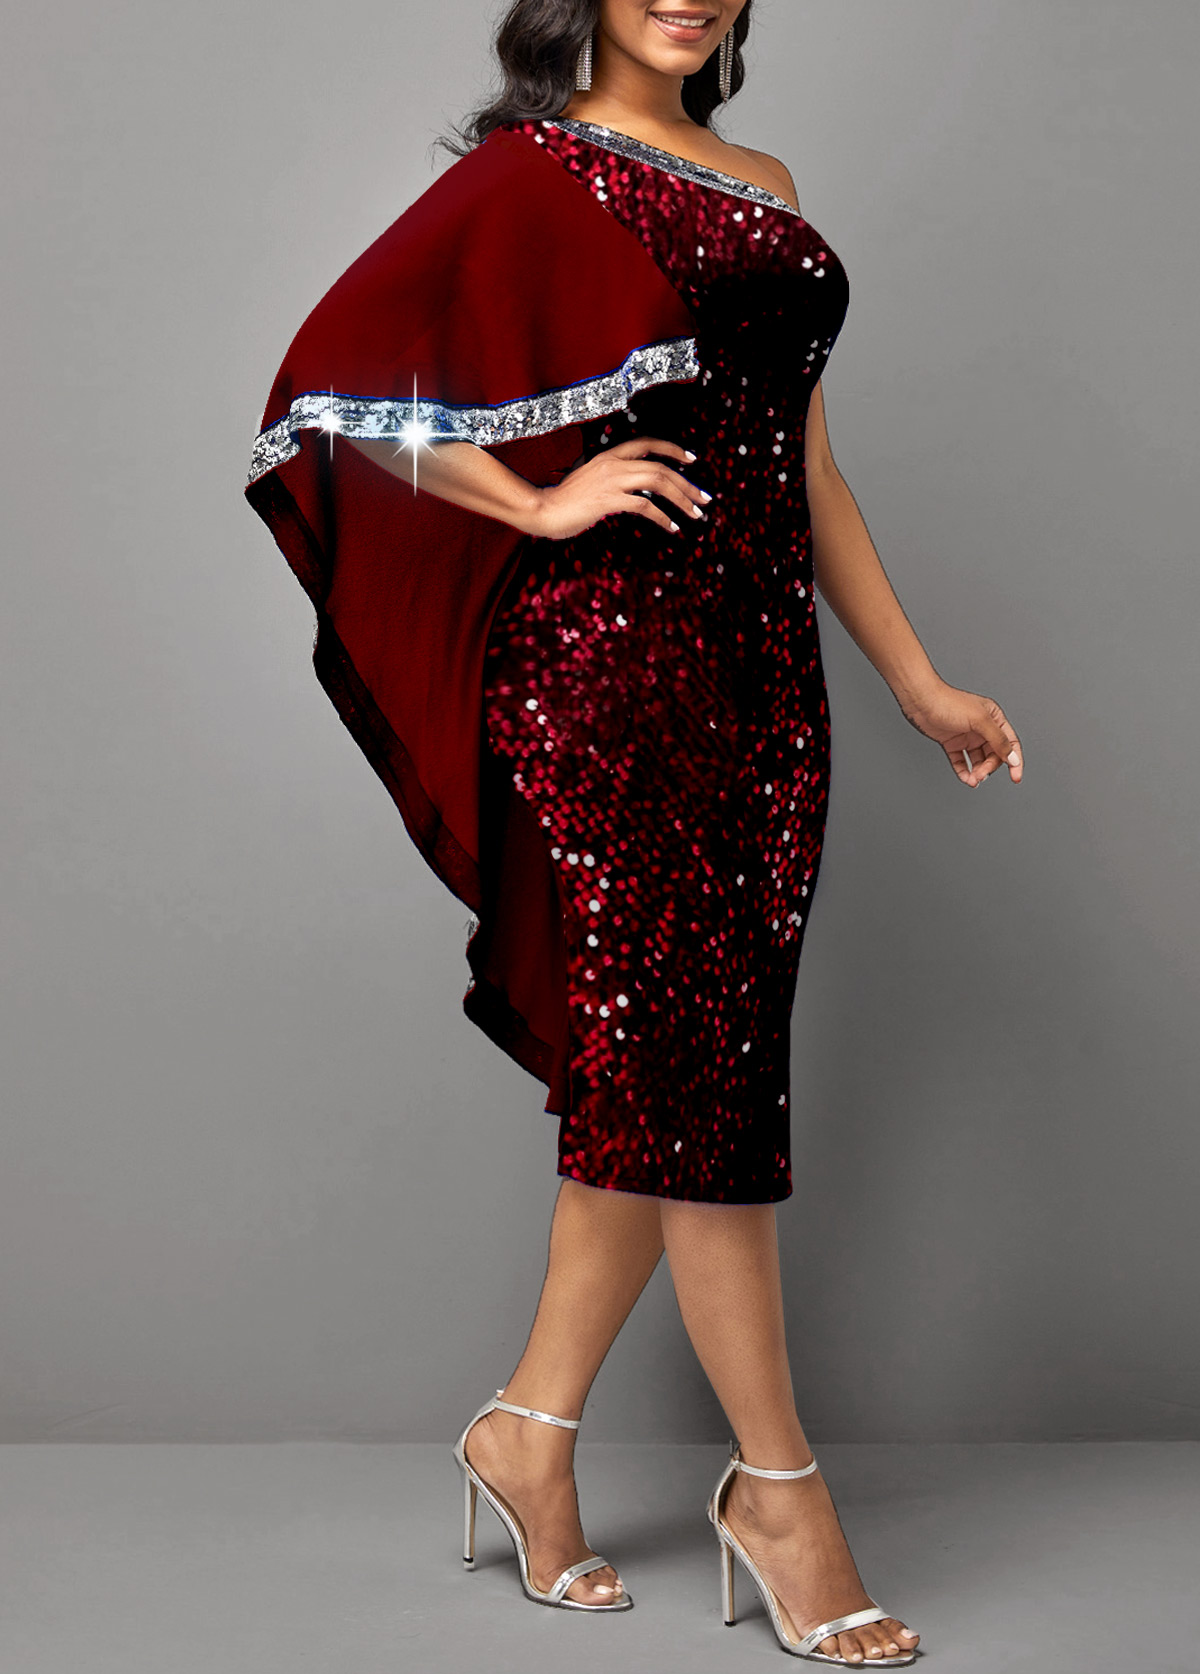 Glitter Fabric Stitching Skew Neck Wine Red Dress